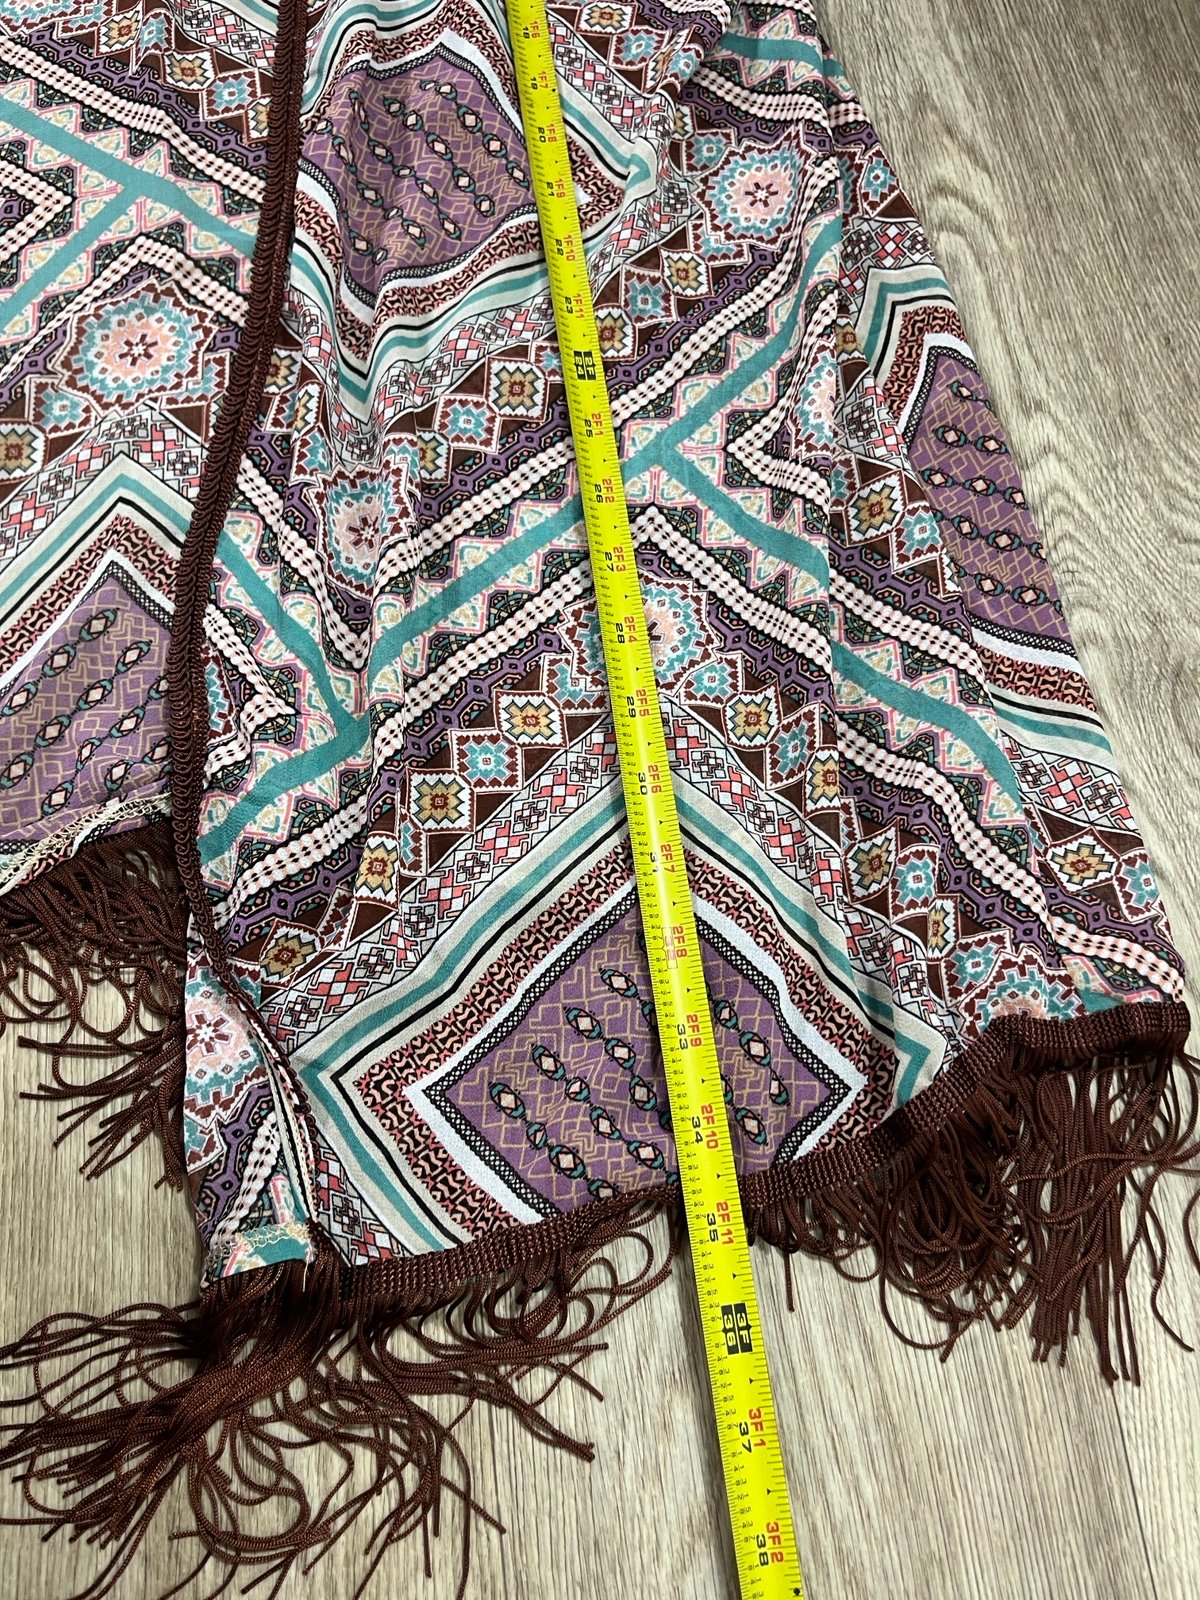 Popular American Rag Kimono brown fringe multicolor pattern small/medium kimono coverup iyQbH6XEP Great